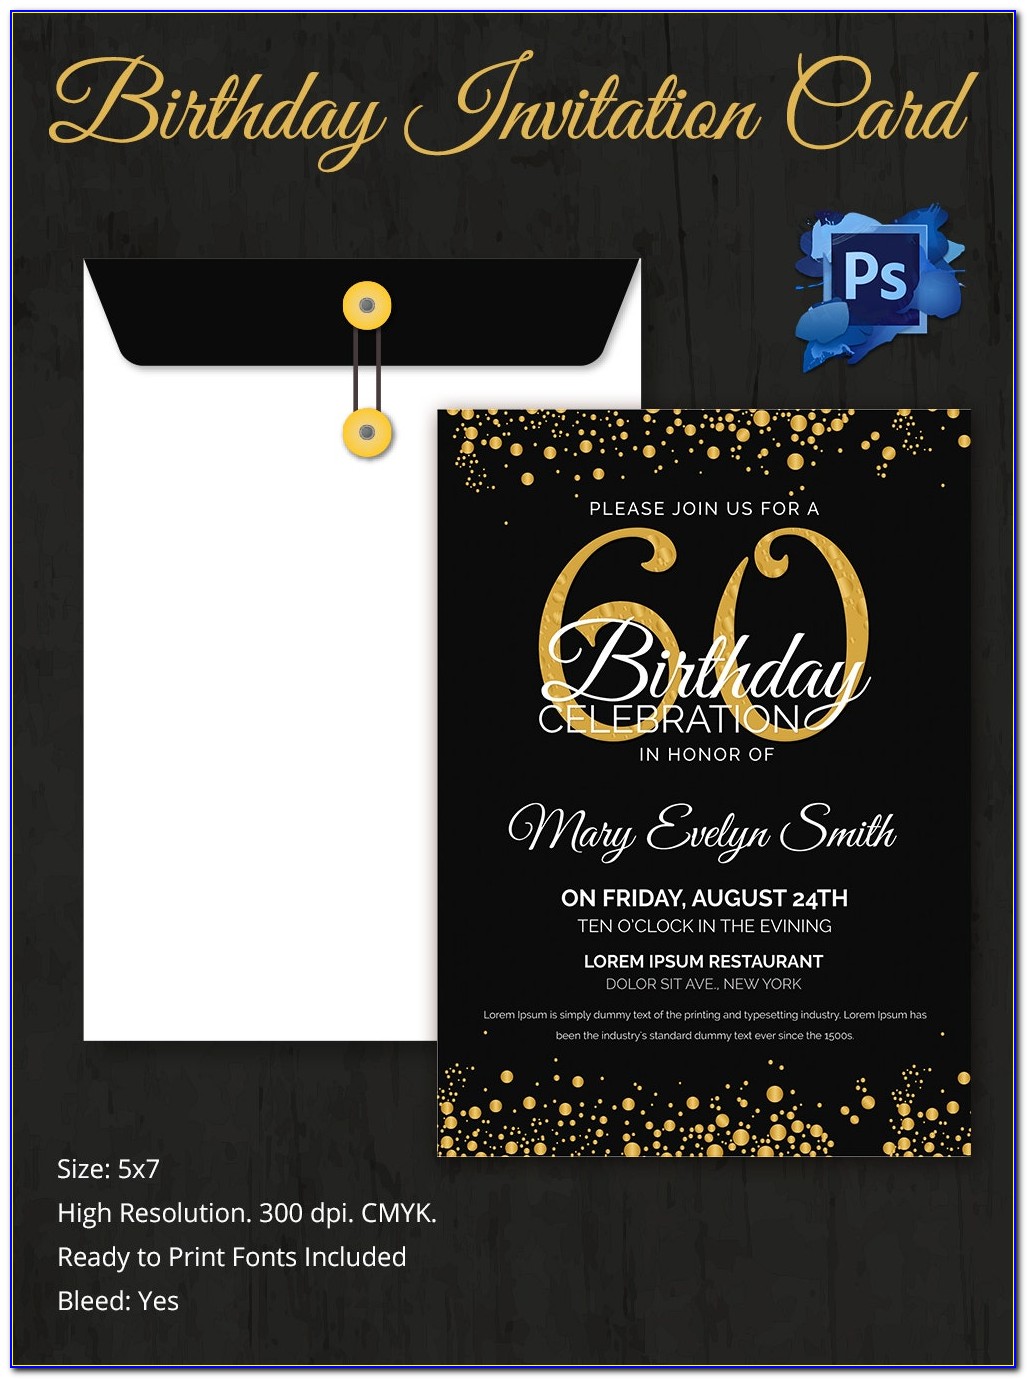 Birthday Invitation Card Design Download